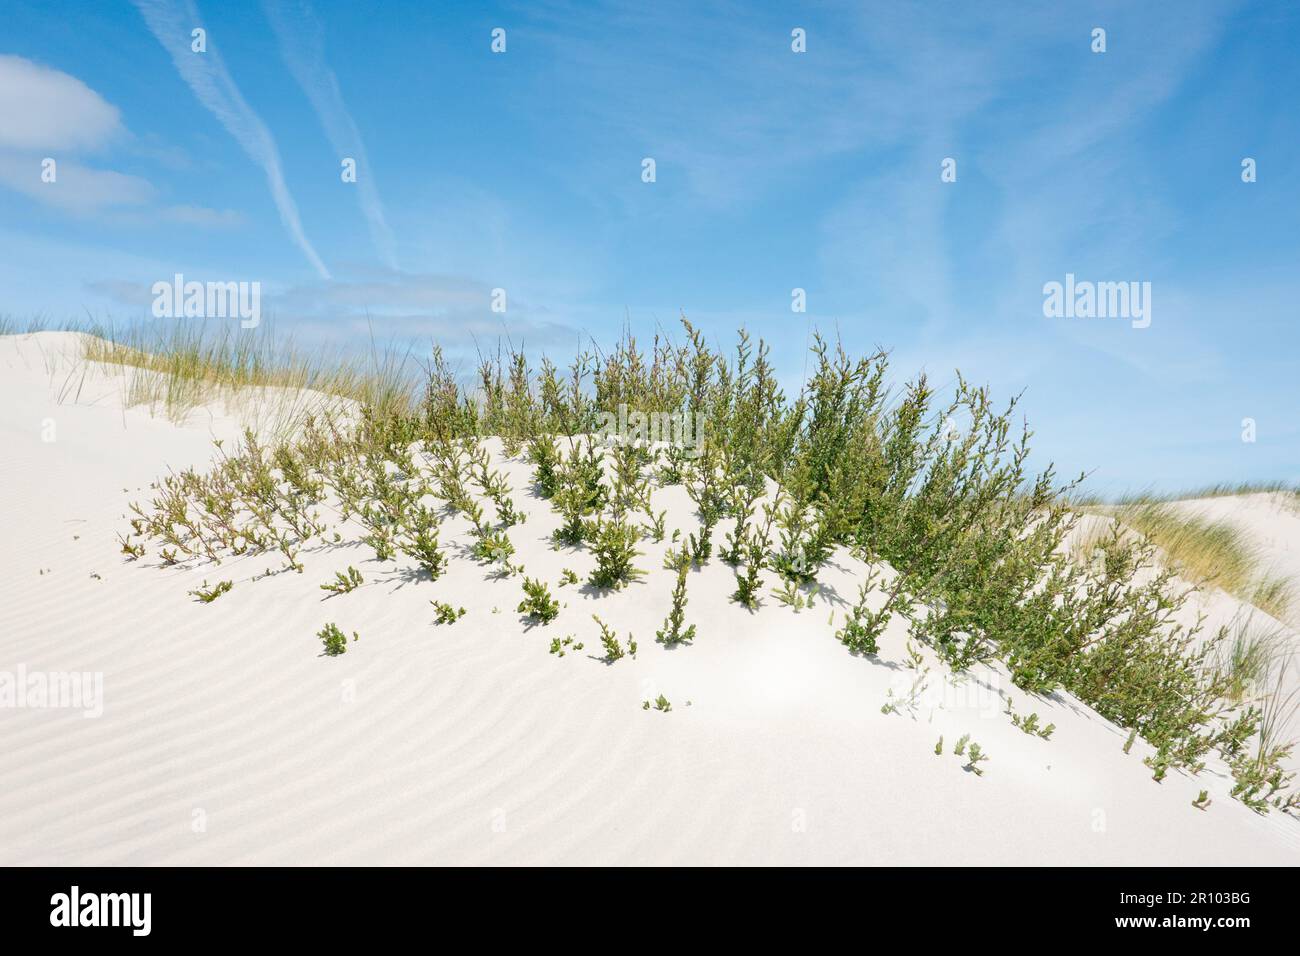 Dune forming: Rami di salice strisciante cattura sabbia e forma duna embrionale Foto Stock